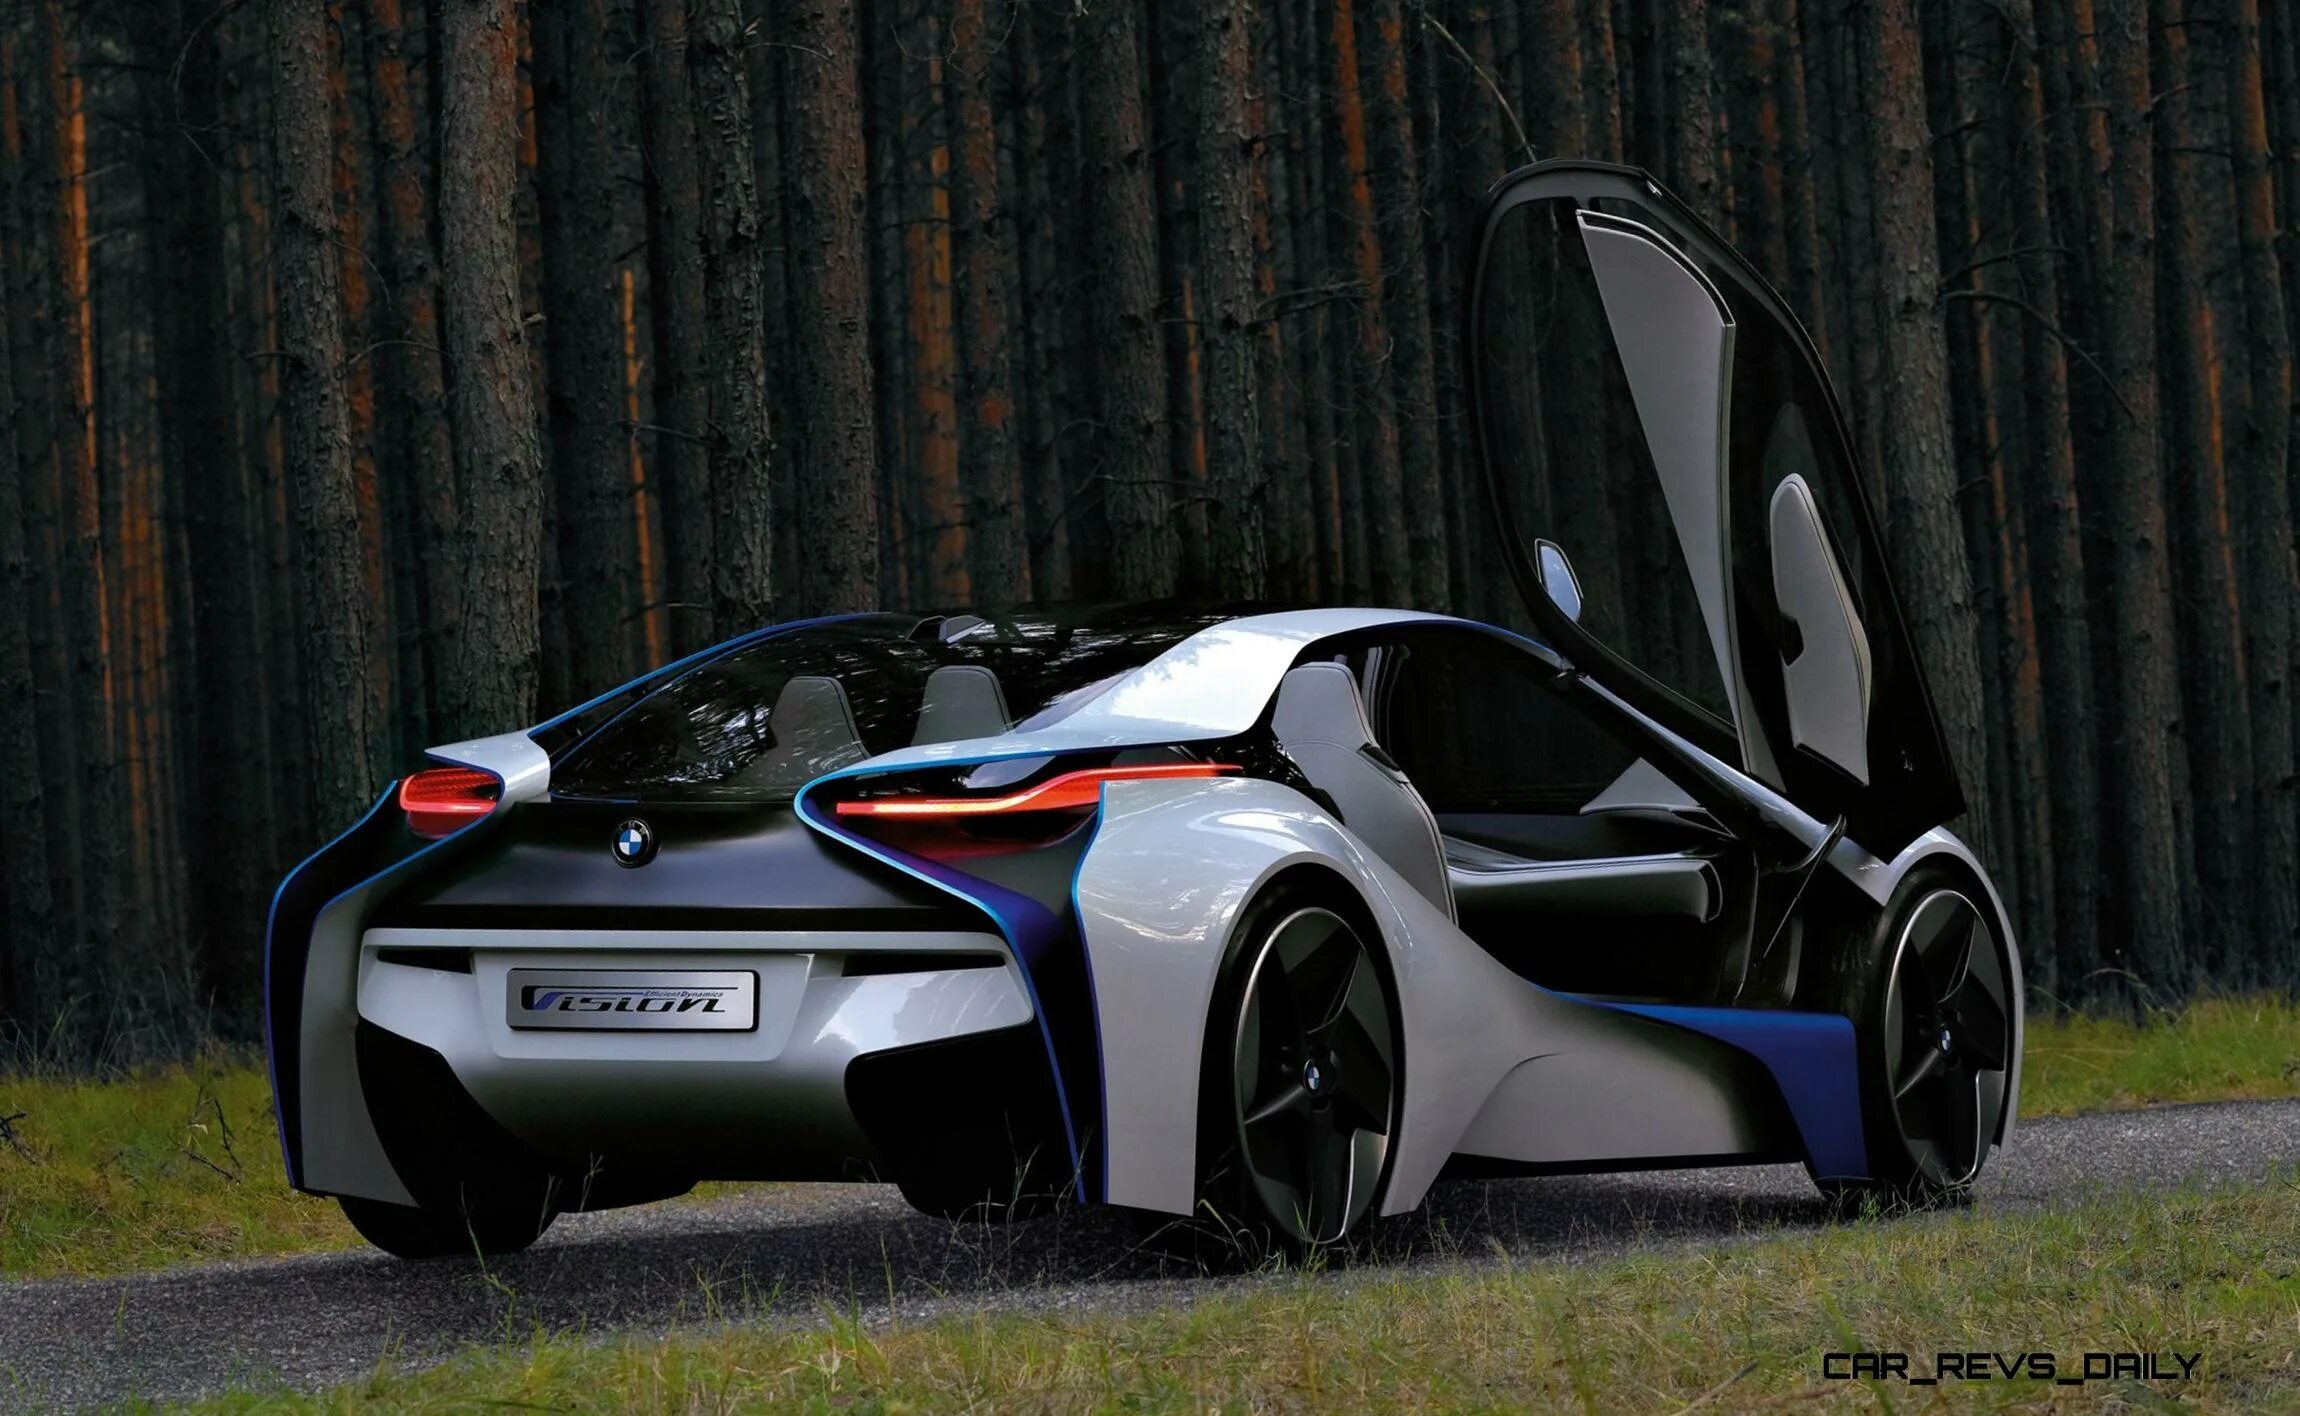 X9 4g. BMW Vision EFFICIENTDYNAMICS. BMW i8 Vision. BMW Vision EFFICIENTDYNAMICS Concept 2009. BMW i8 Vision Concept.